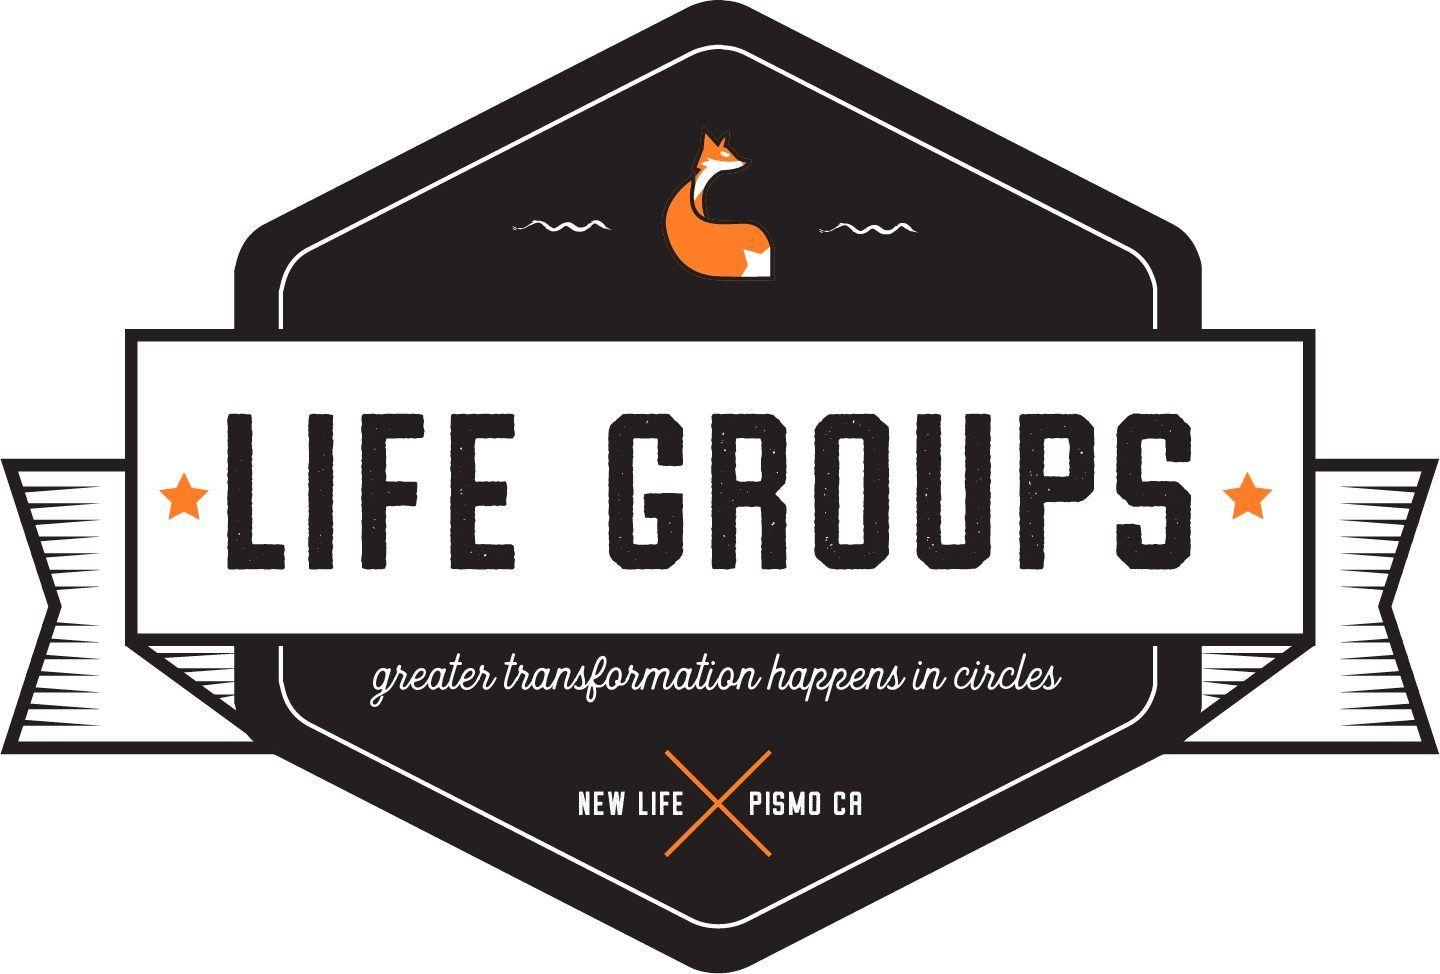 LifeGroups Logo - life groups logo - N E W L I F E